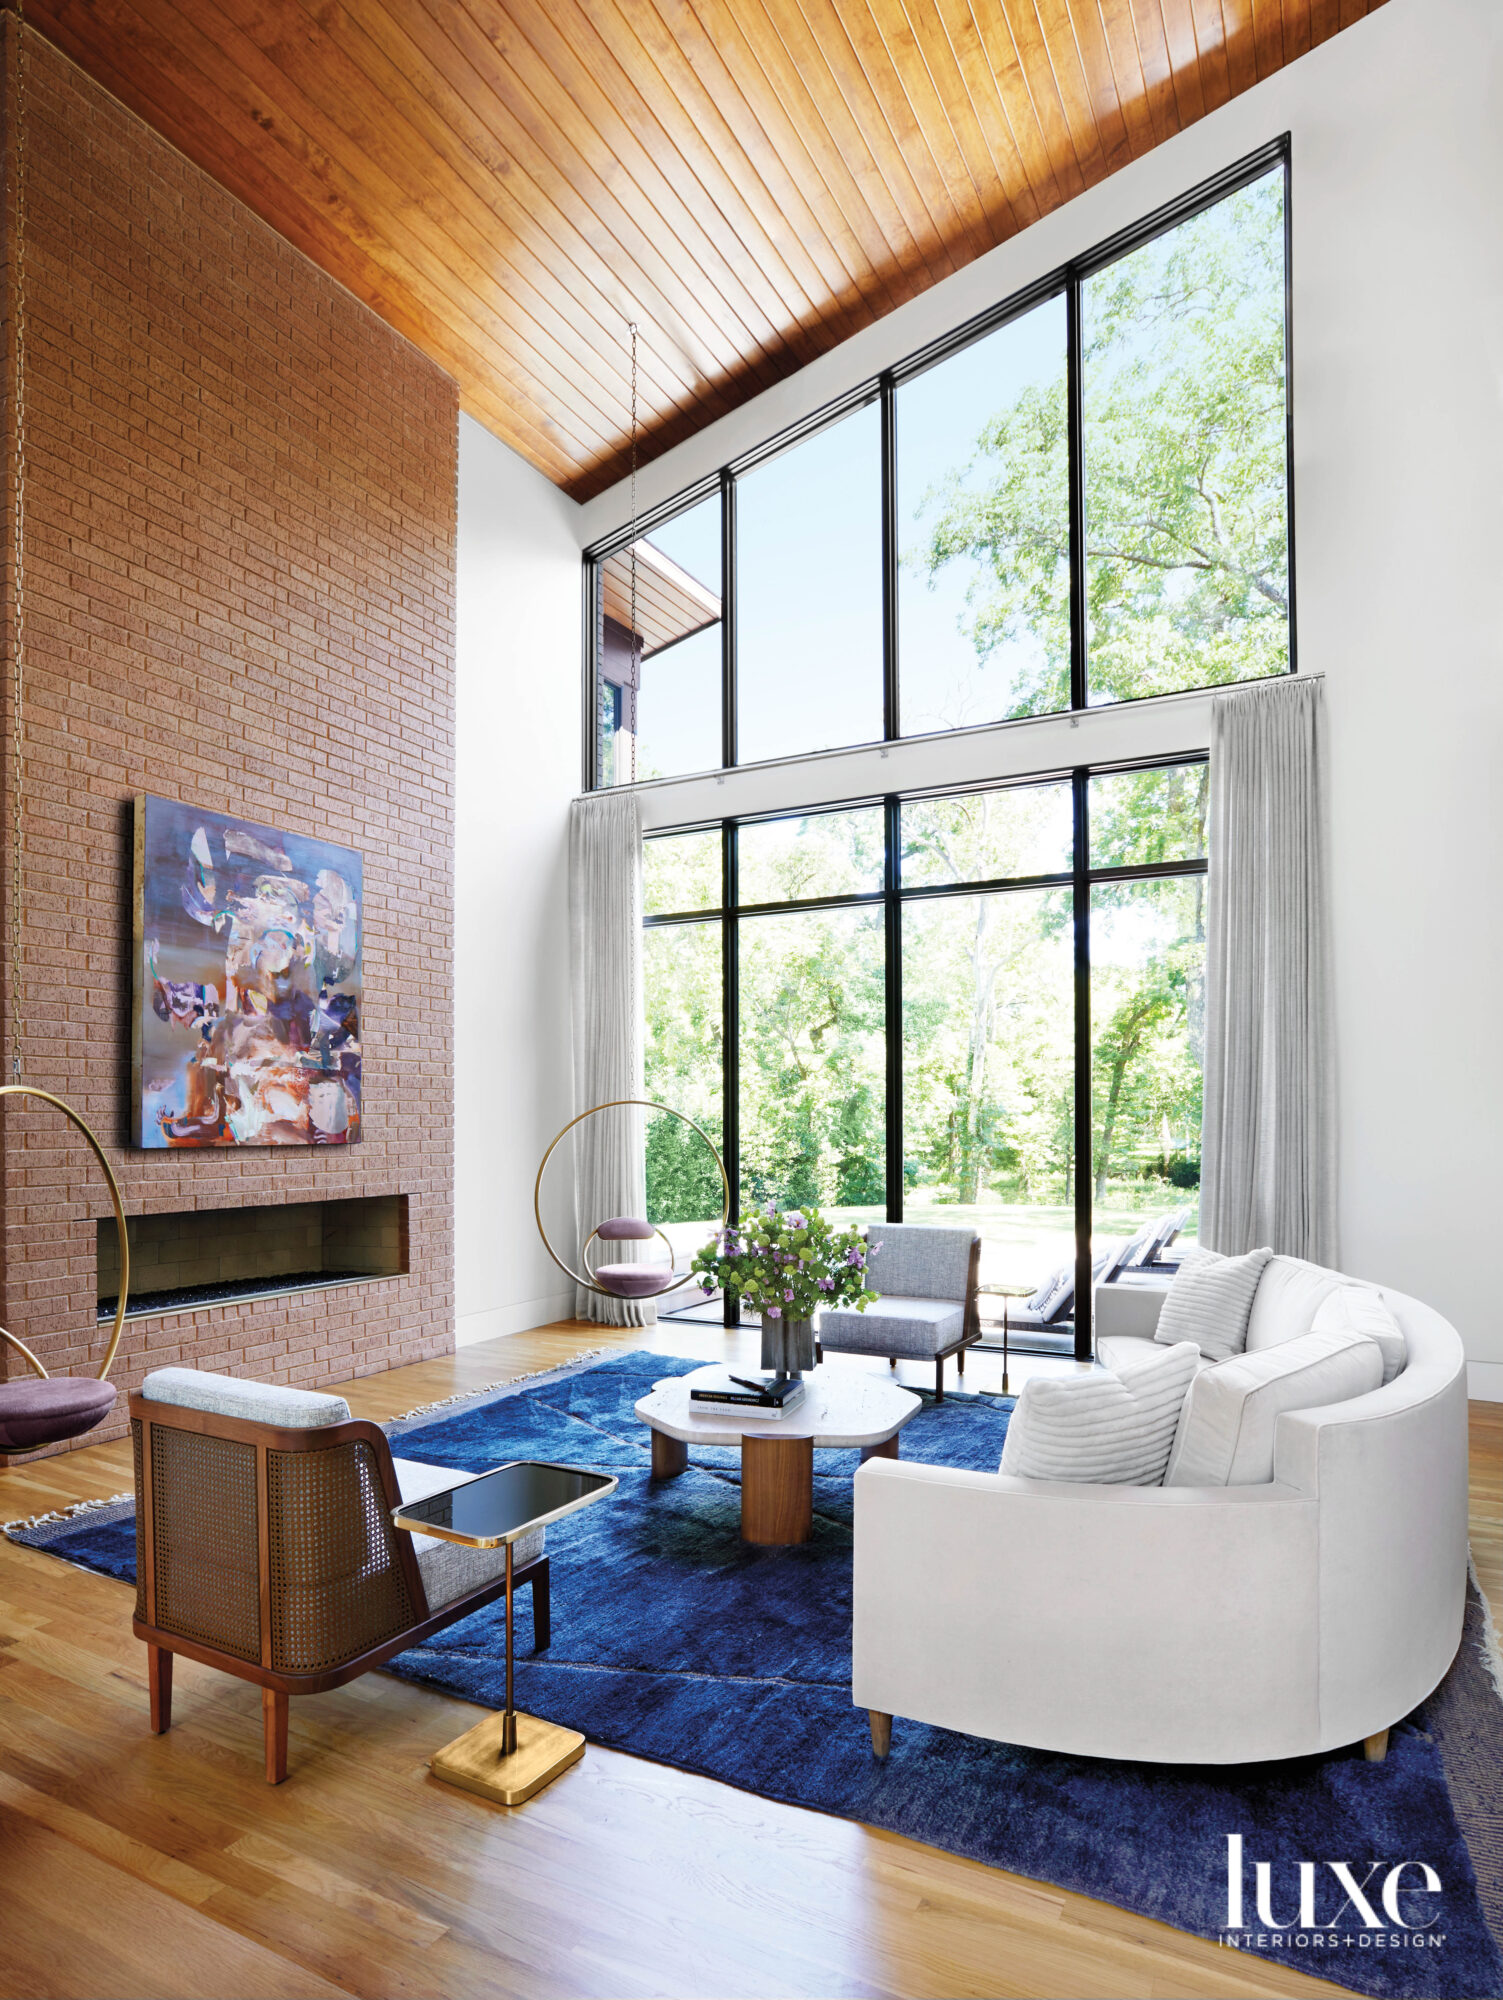 Living room featuring a Lee Broom Hanging Hoop chair and midcentury modern-style furnishings